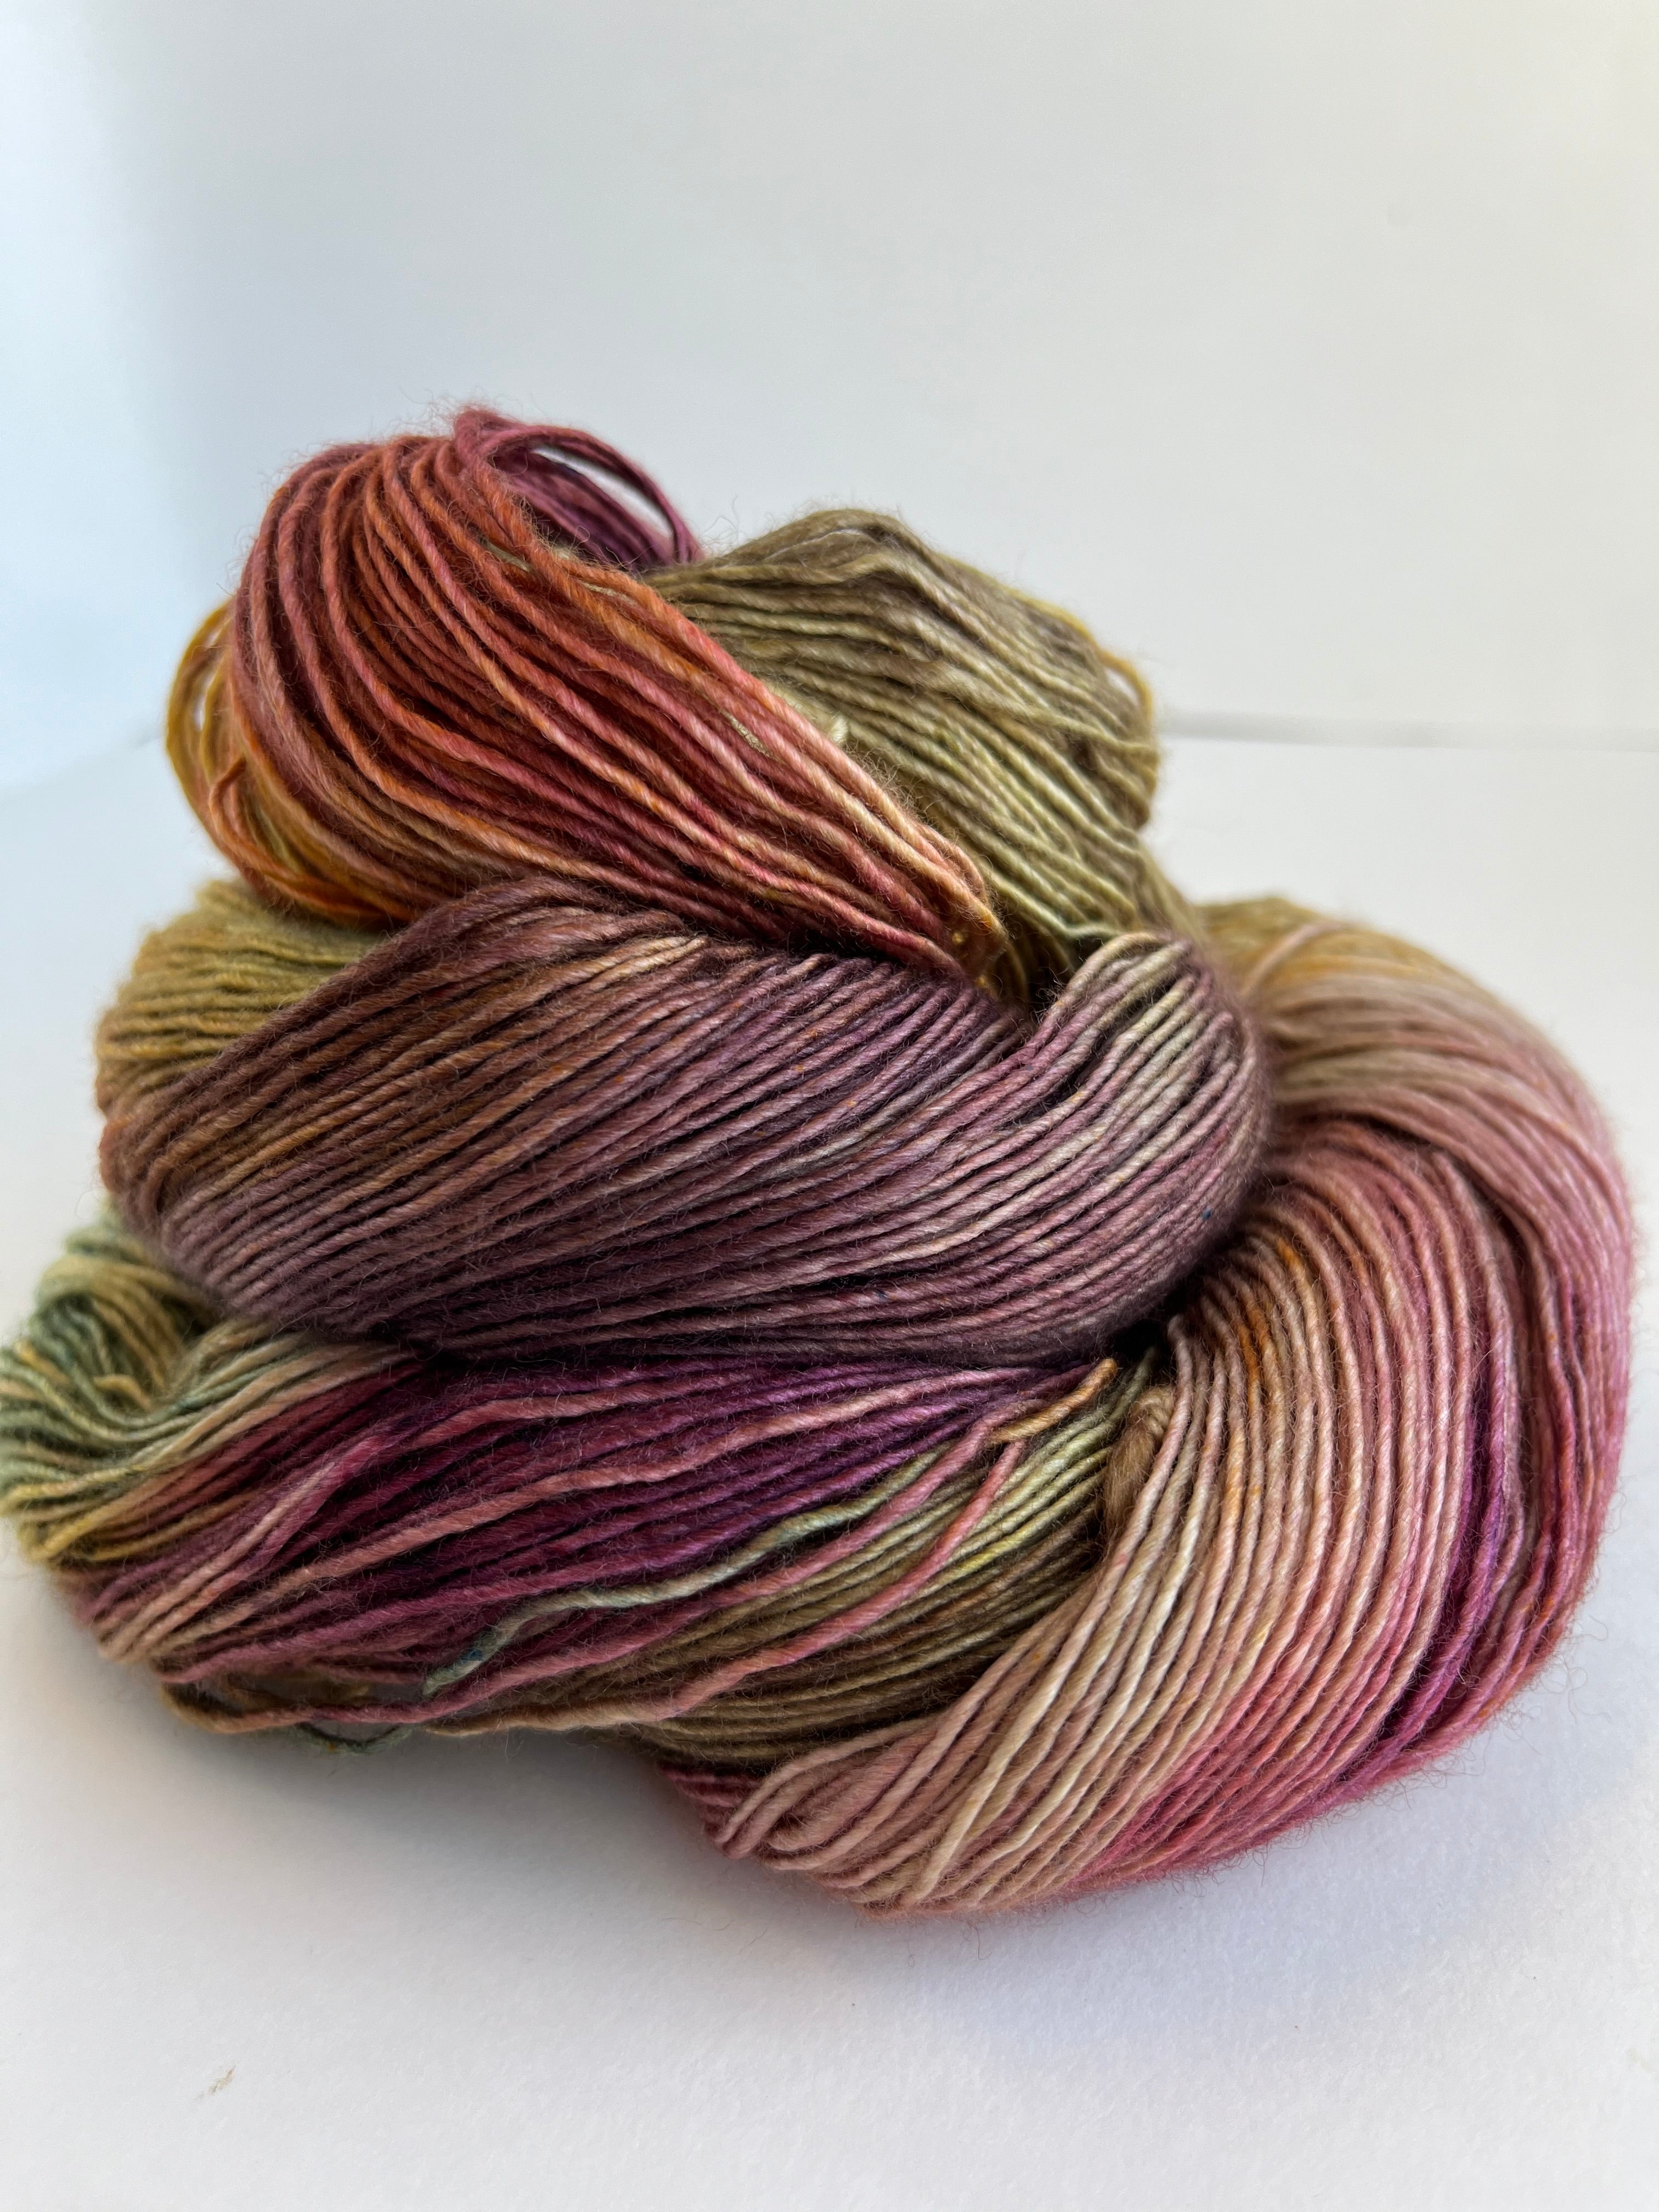 Nordheimer - River Silk and Merino from Tributary Yarns